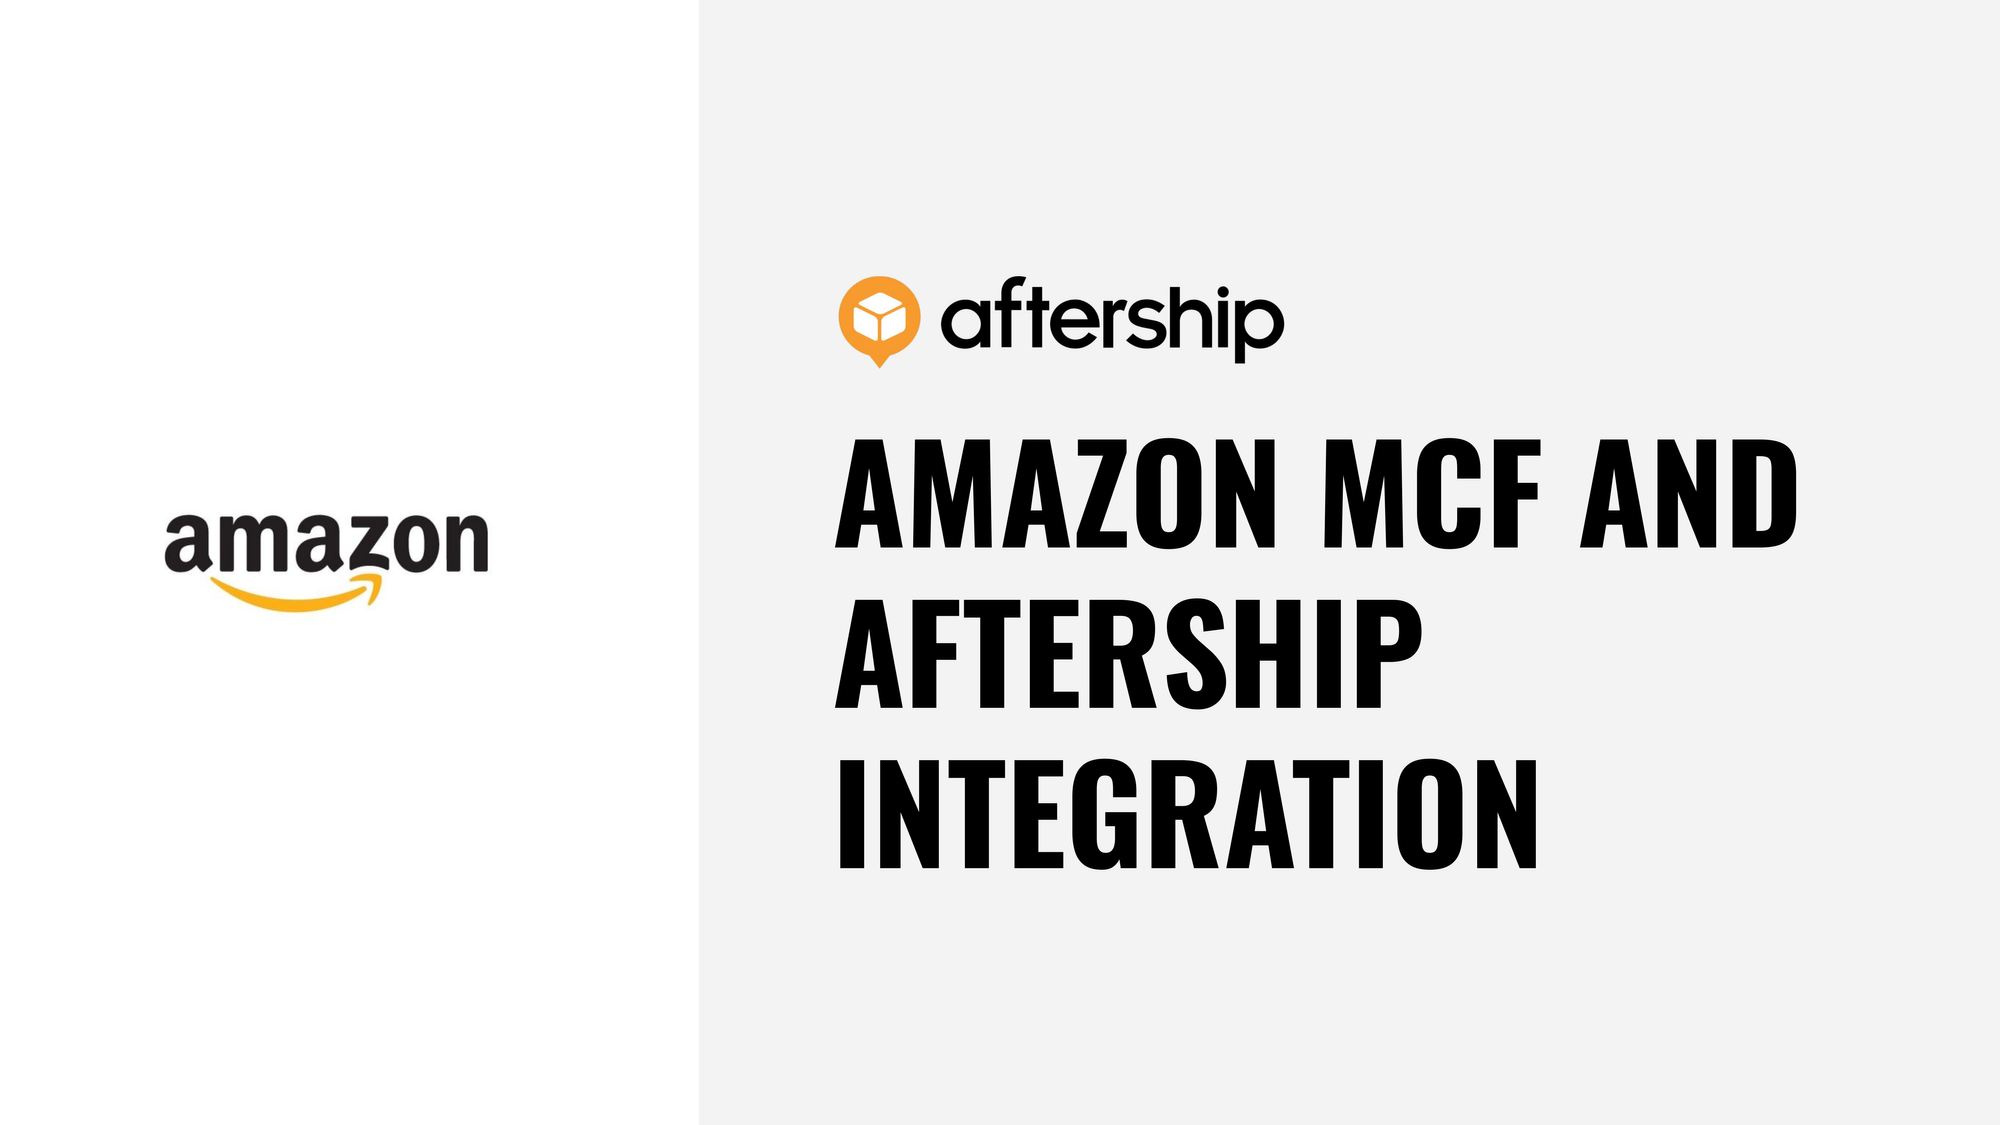 Amazon Multi-Channel Fulfillment (MCF) + AfterShip integration